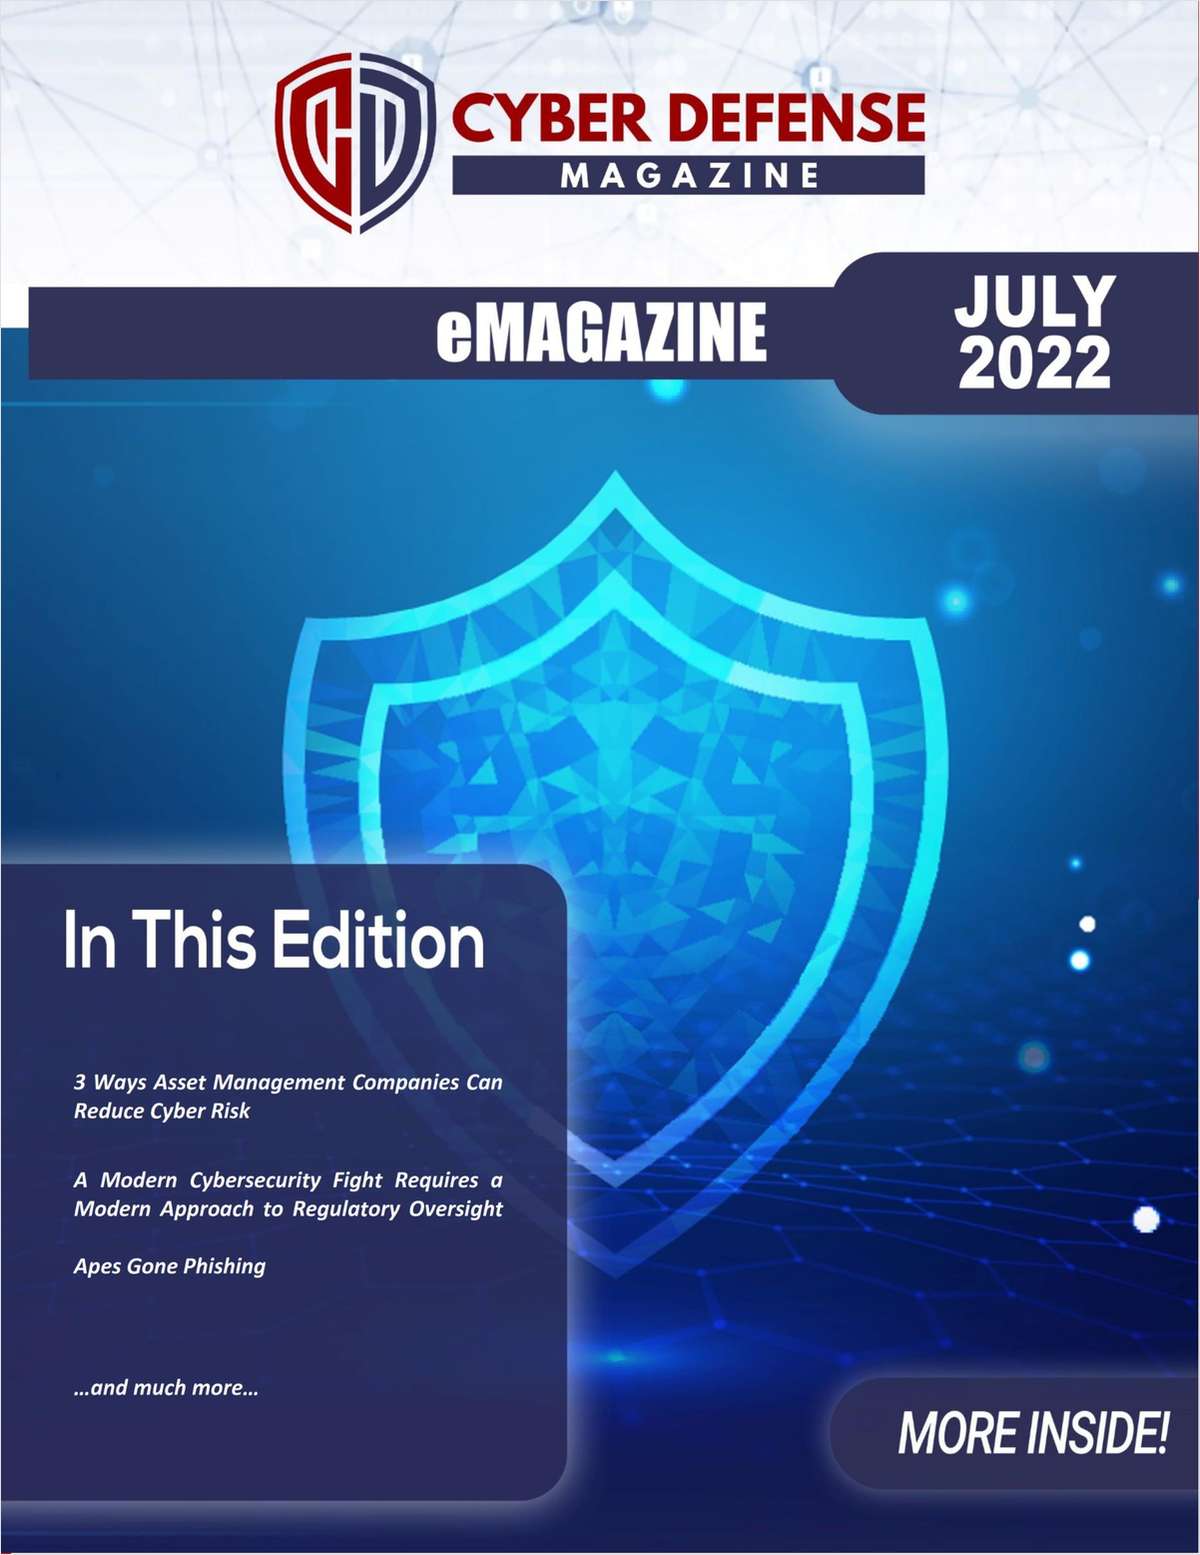 Cyber Defense Magazine July 2022 Edition